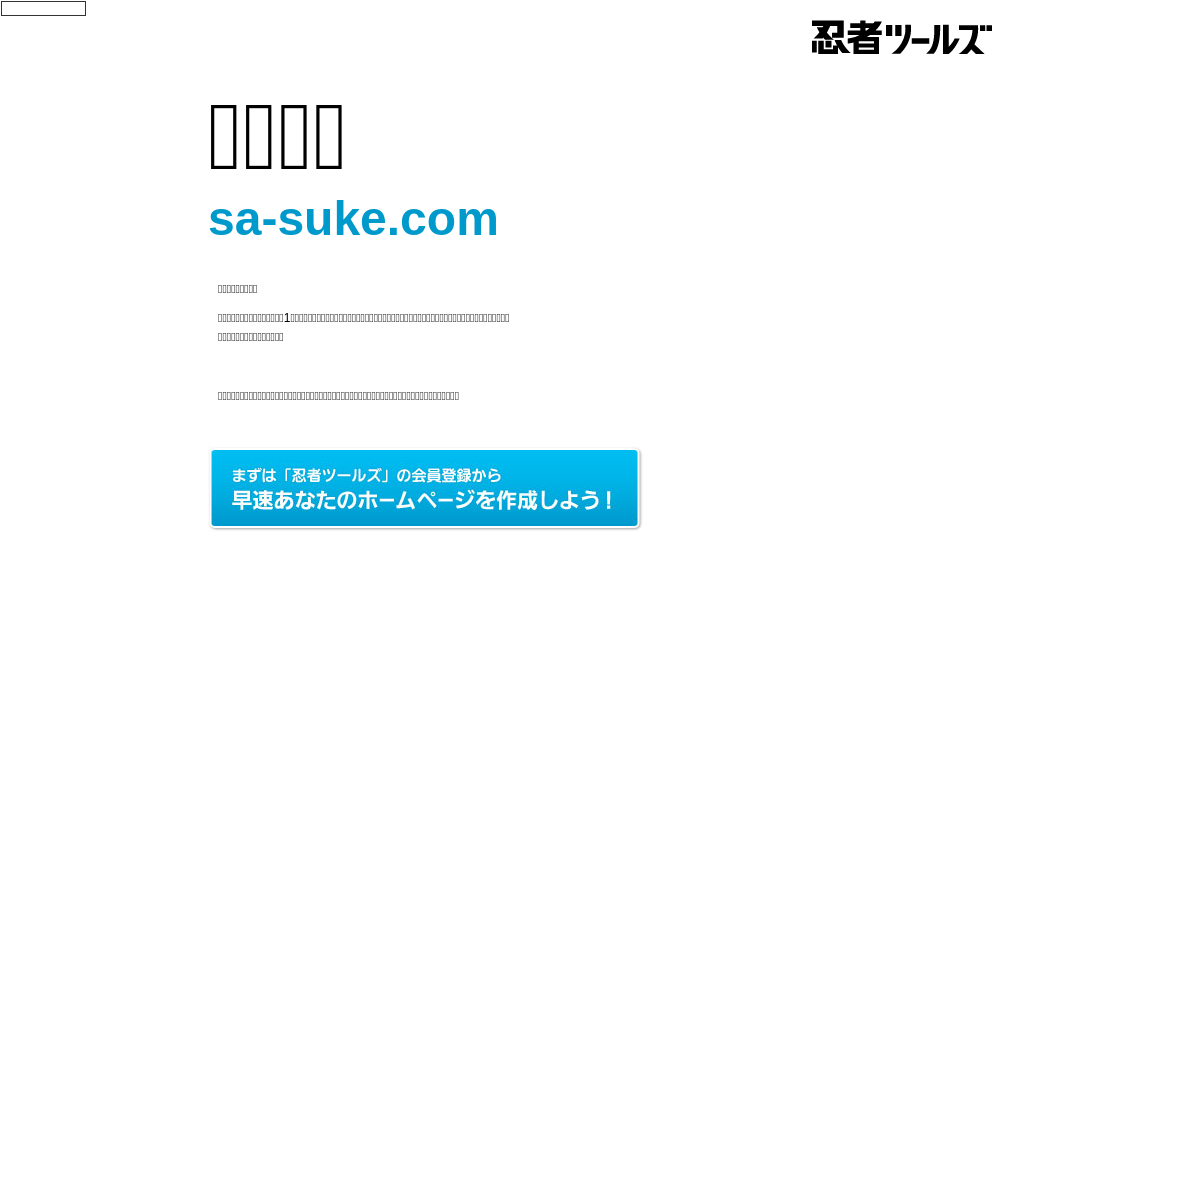 A complete backup of sa-suke.com